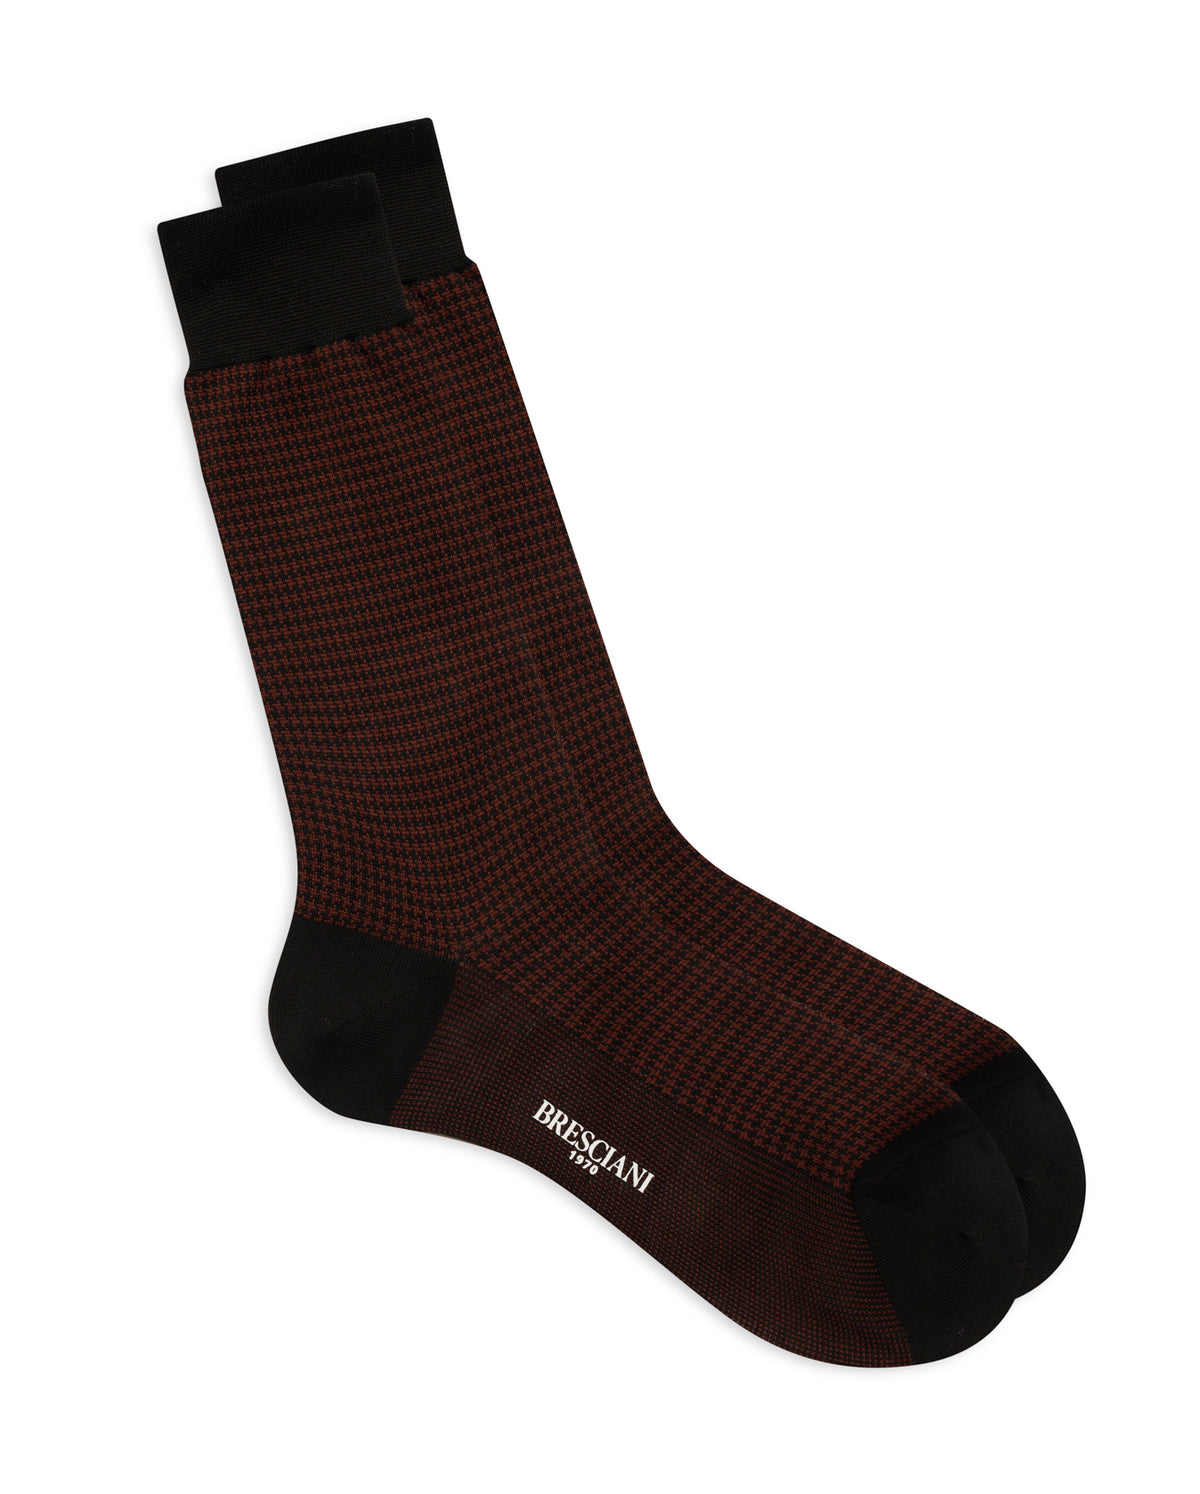 Houndstooth Calf Length Socks - Brown